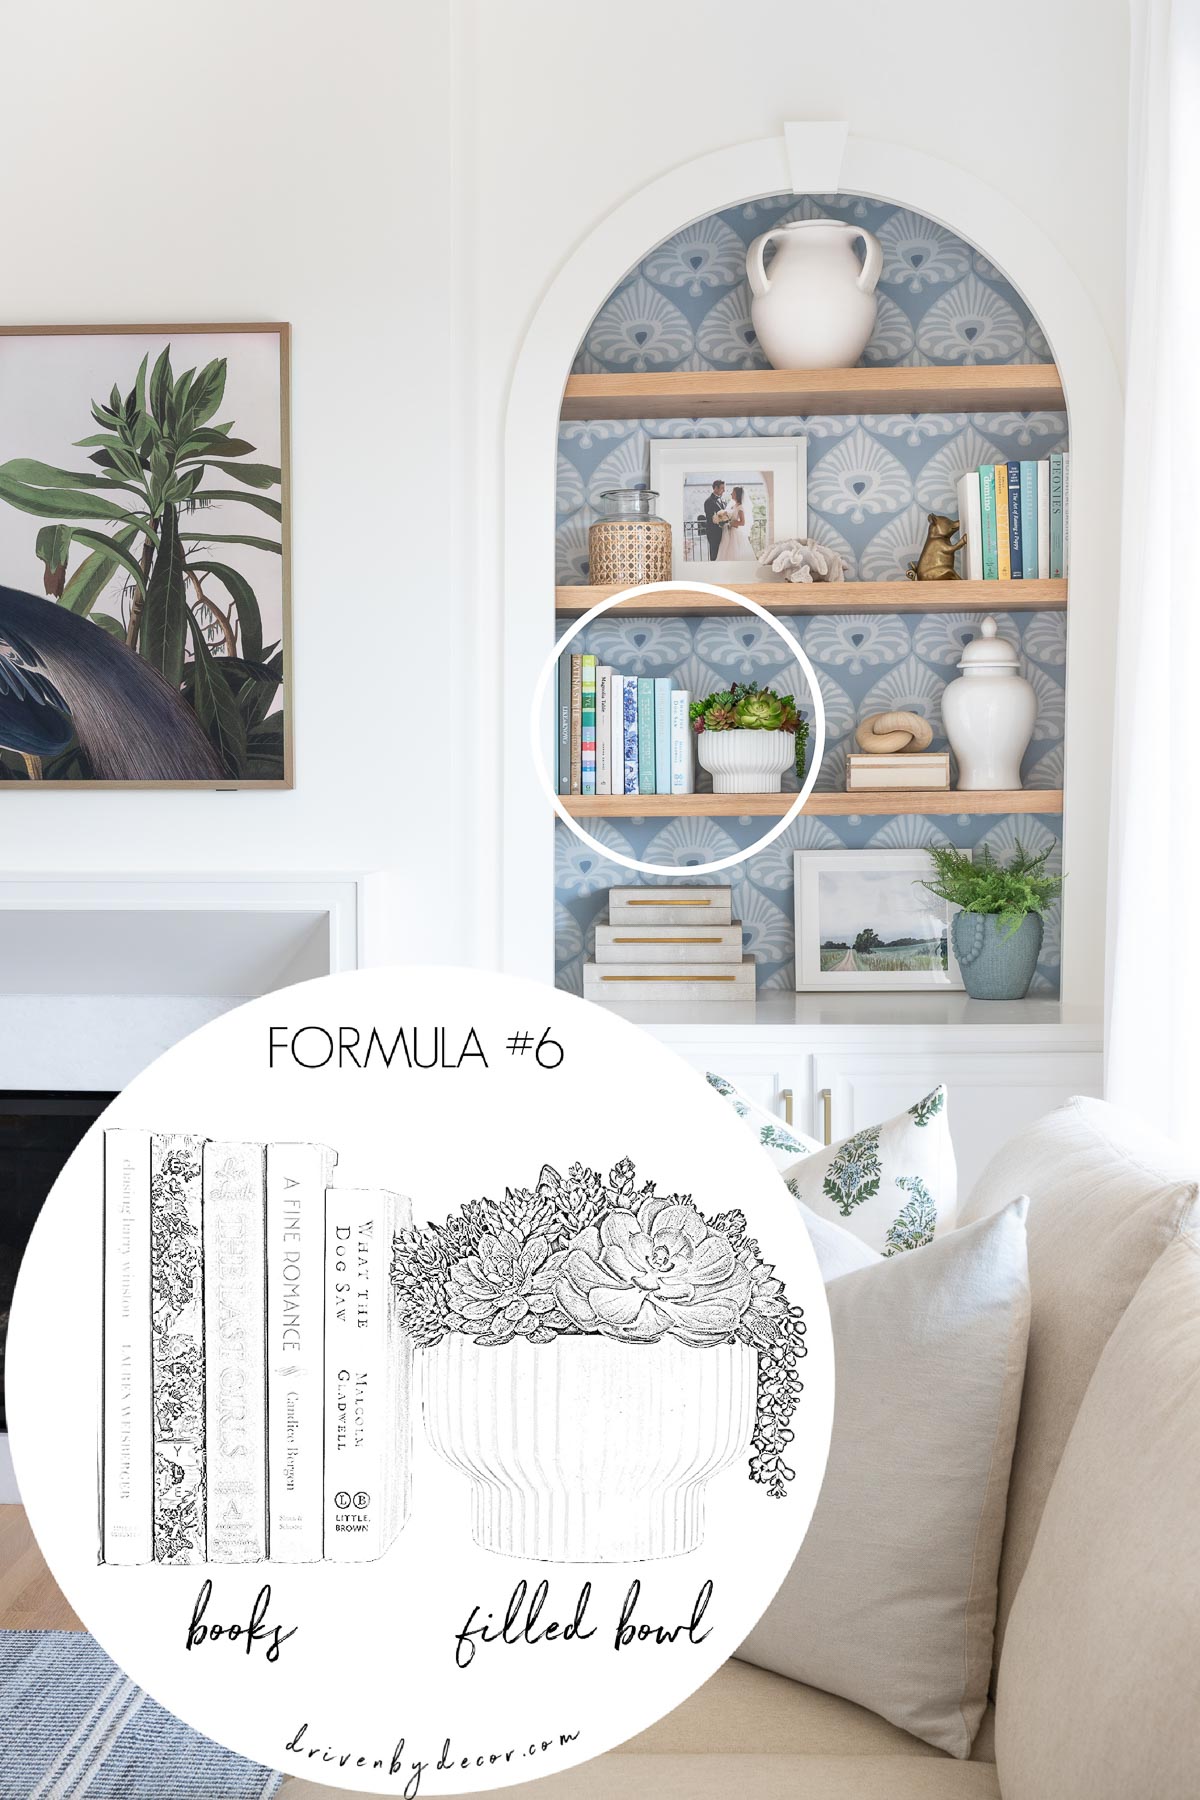 A series of books next to a decorative bowl for simple shelf decor